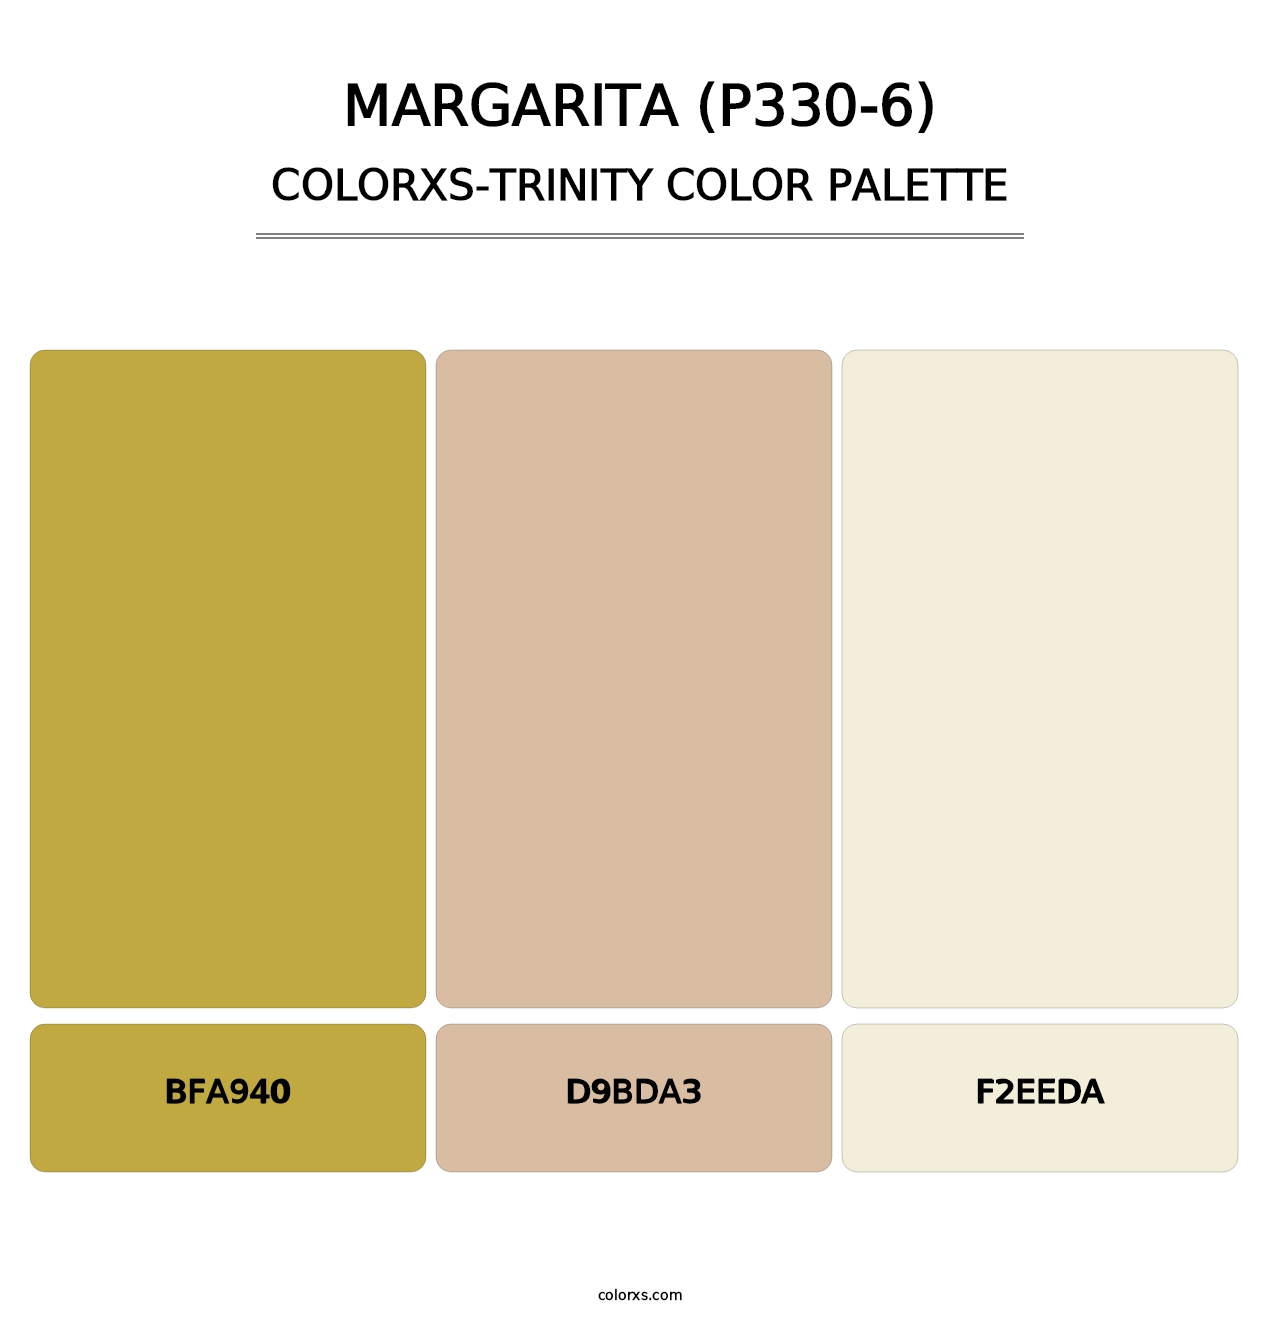 Margarita (P330-6) - Colorxs Trinity Palette